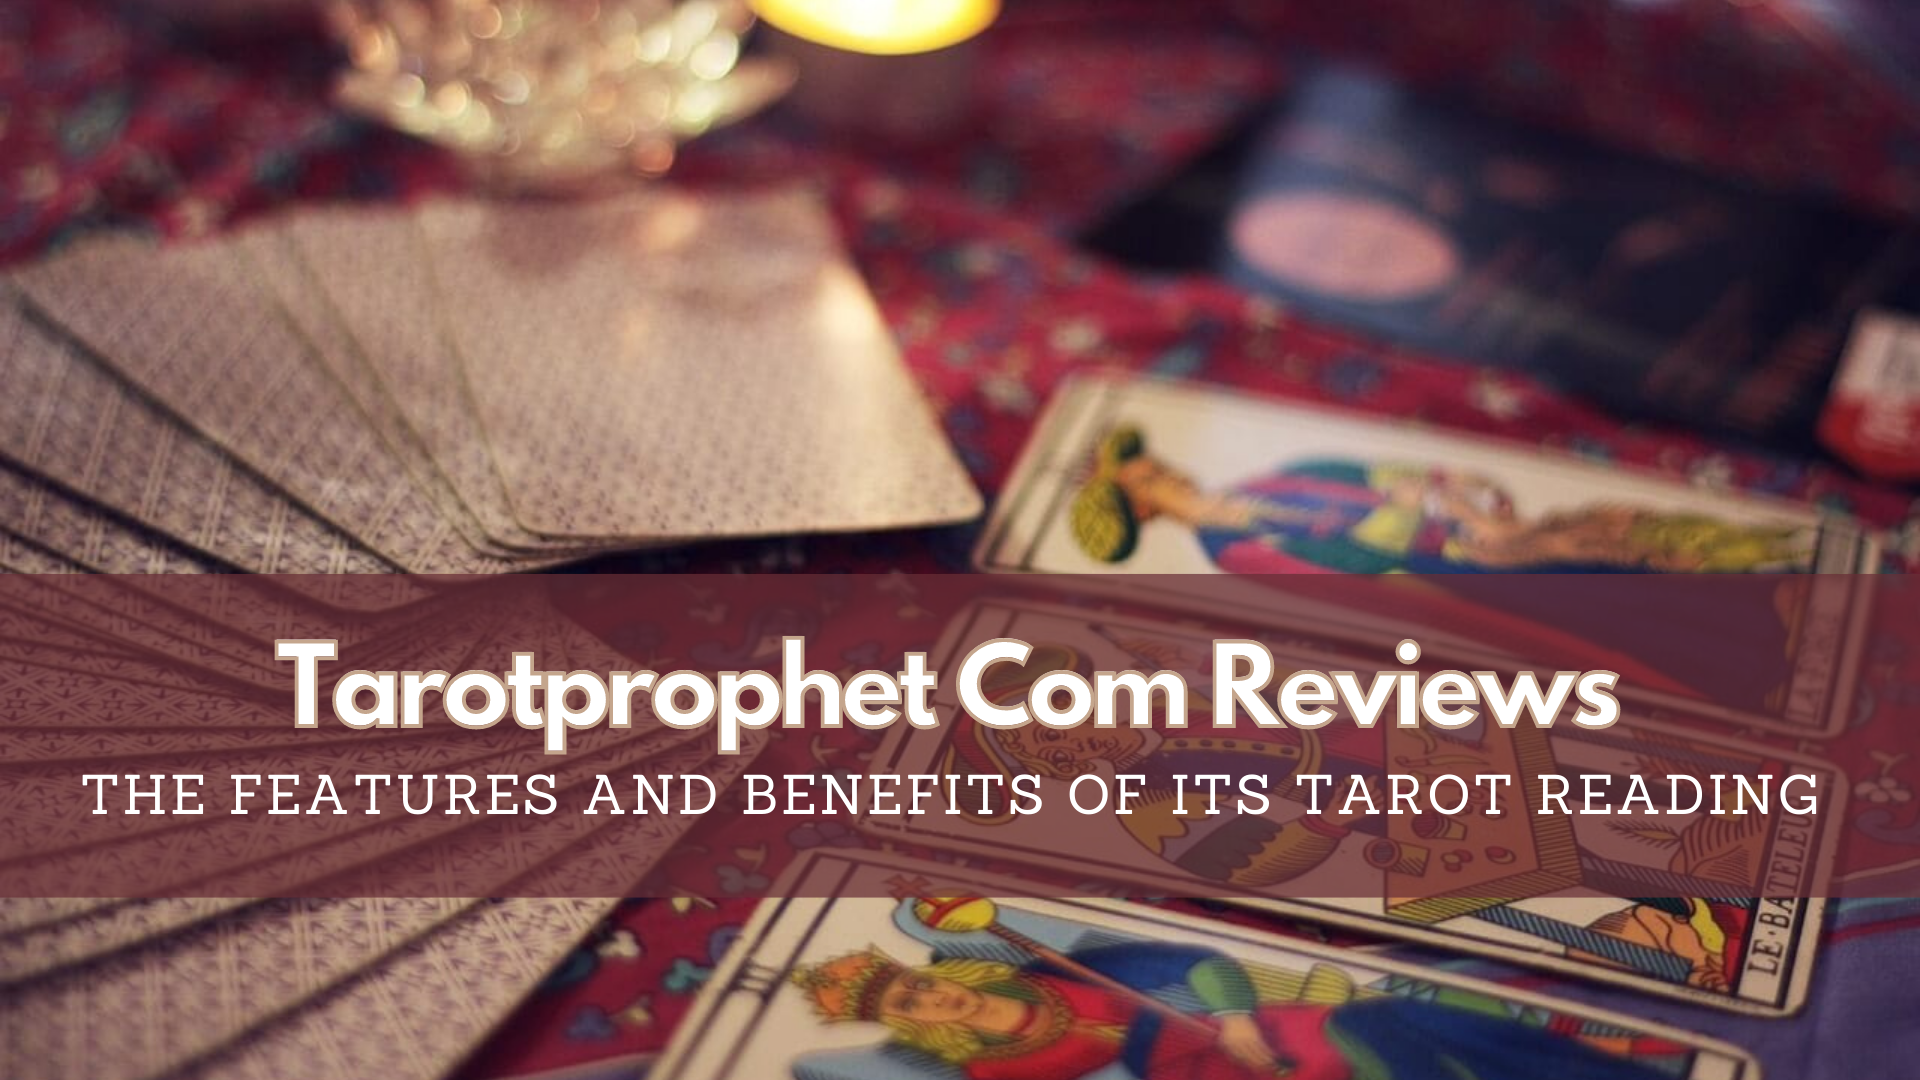 Tarotprophet Com Reviews - The Features And Benefits Of Its Tarot Reading